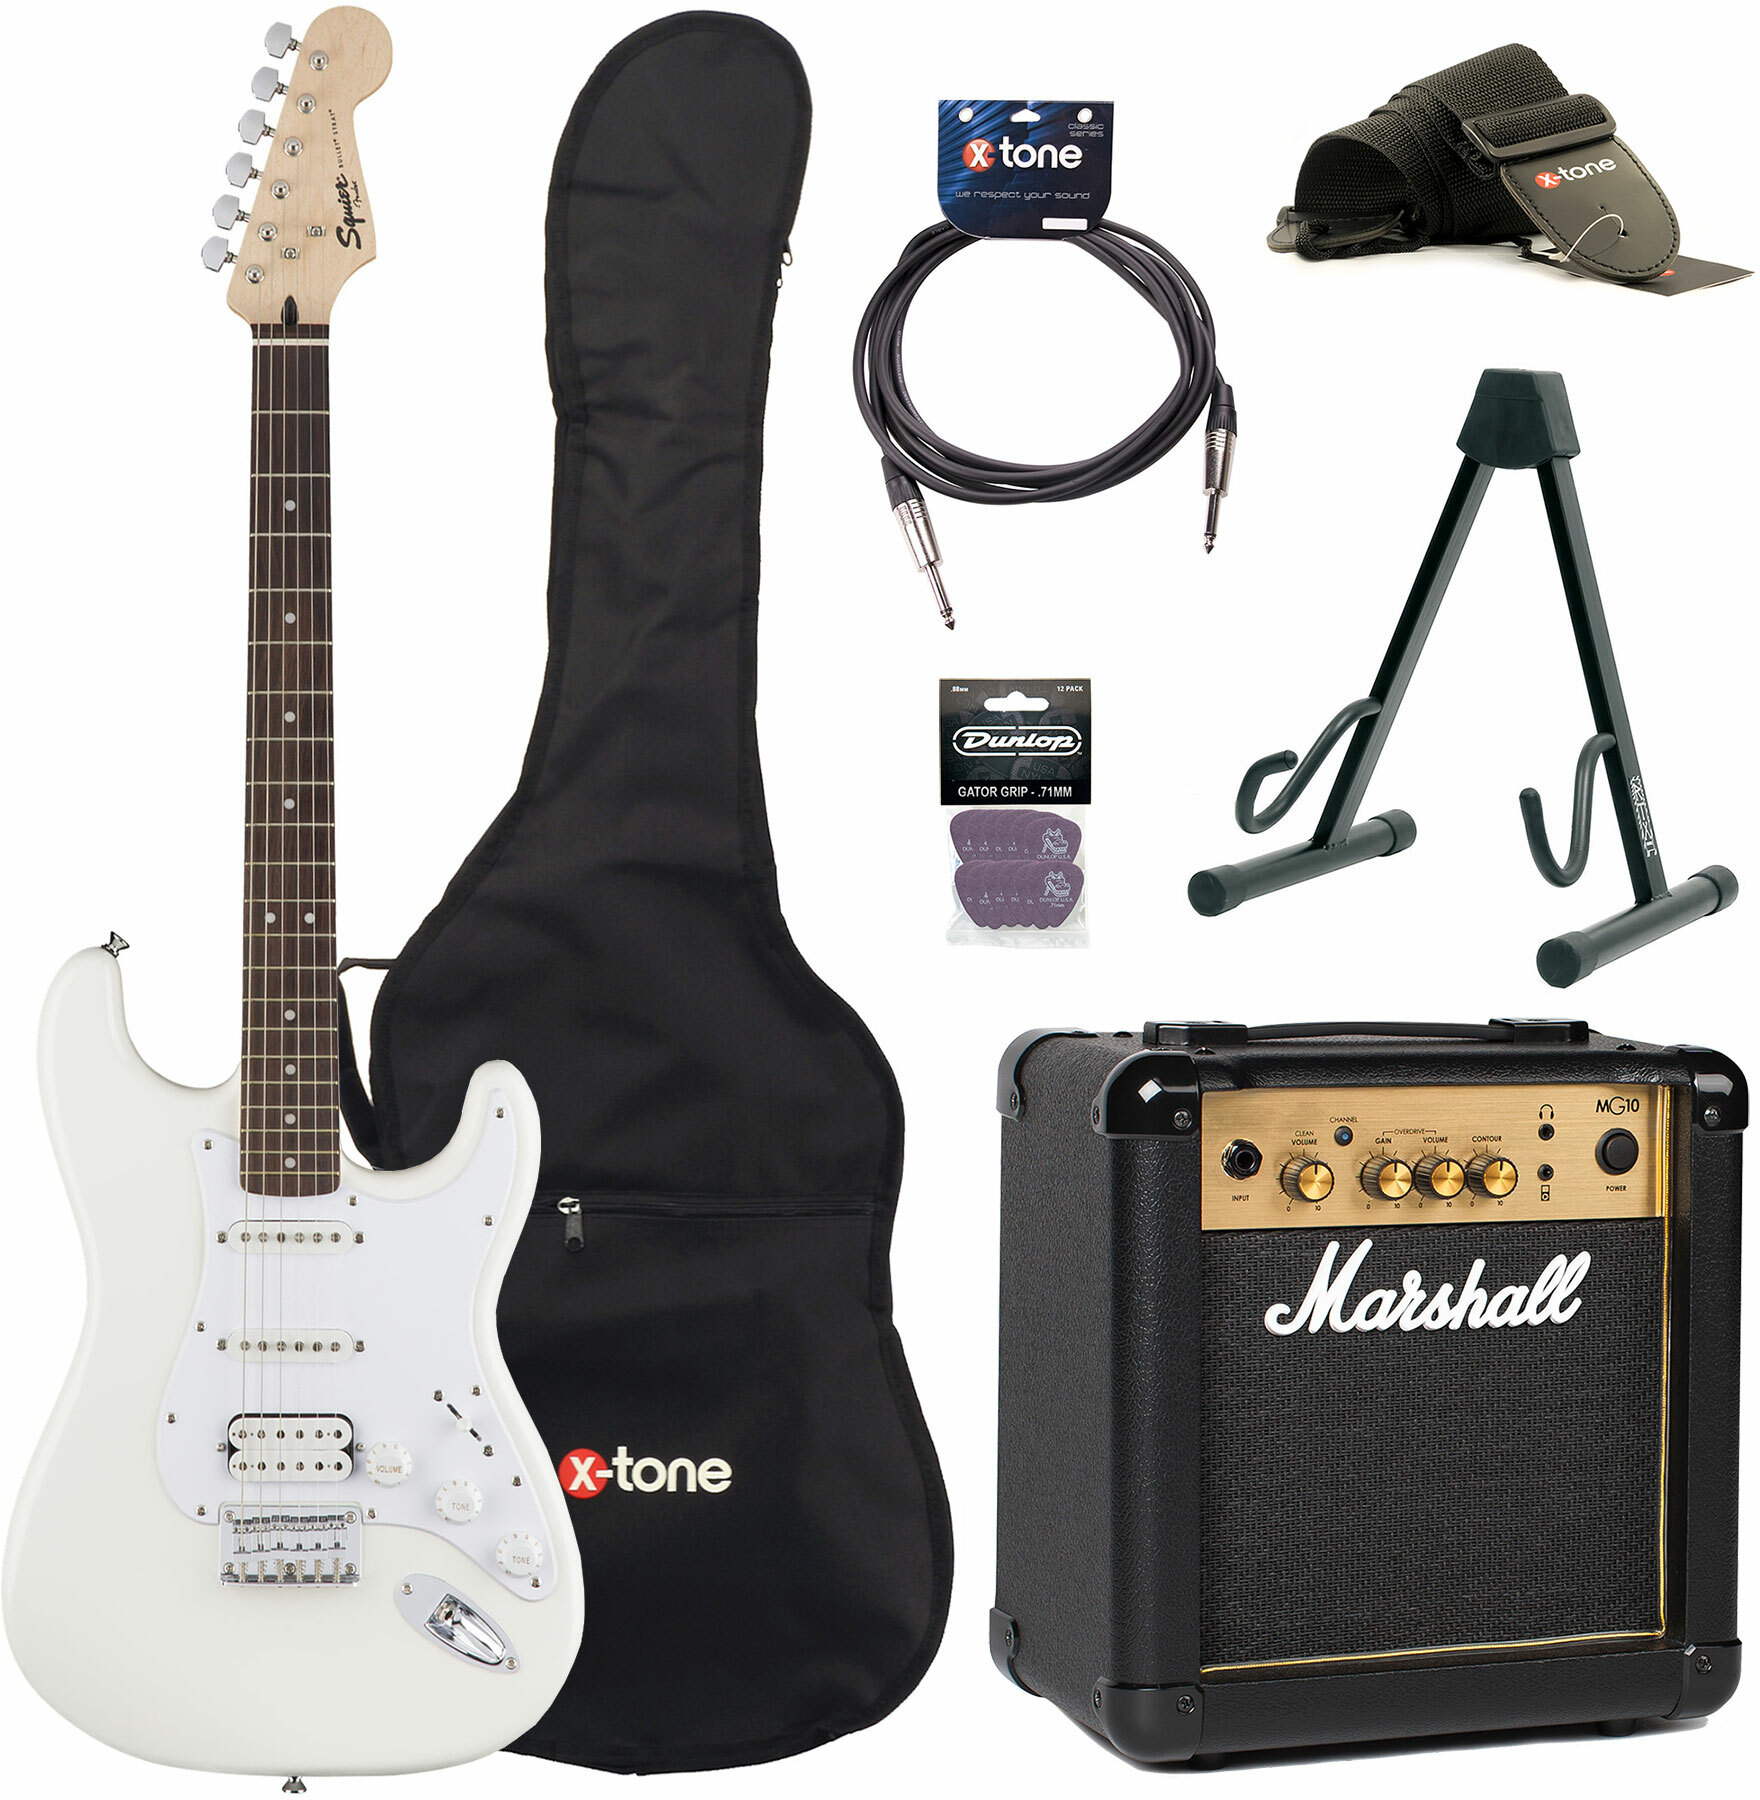 Squier Strat Bullet Ht Hss + Marshall Mg10g + Access X-tone - Arctic White - Elektrische gitaar set - Main picture